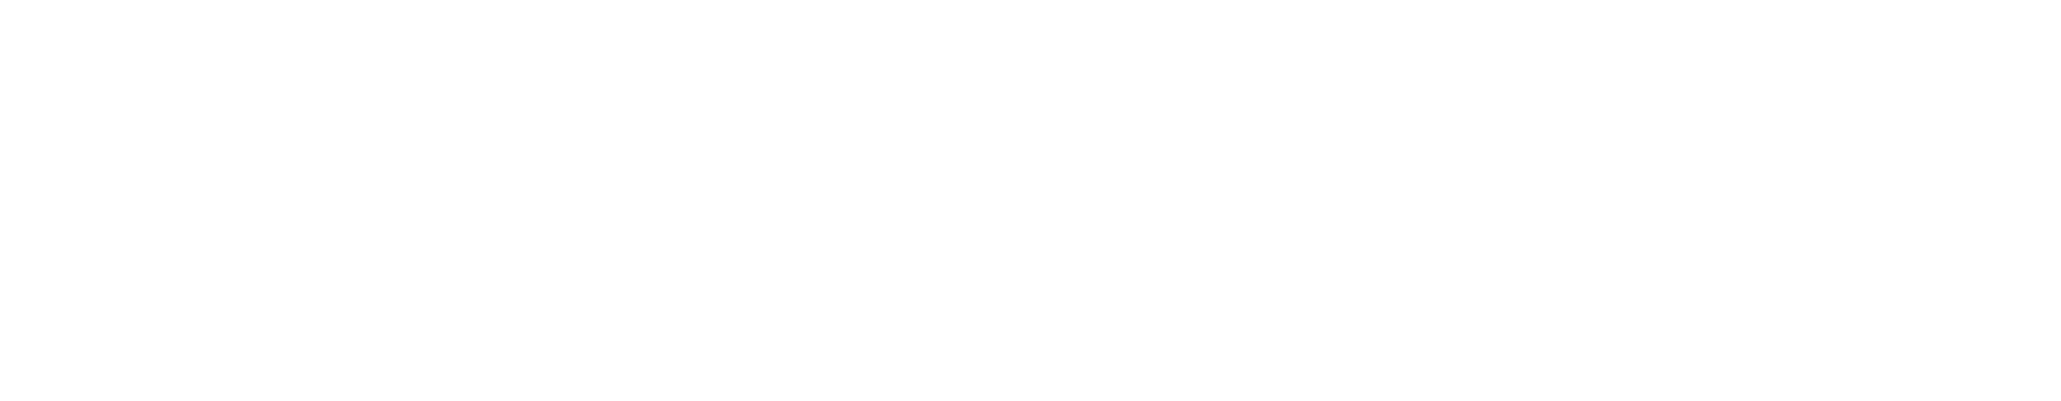 denver_families_logo.png